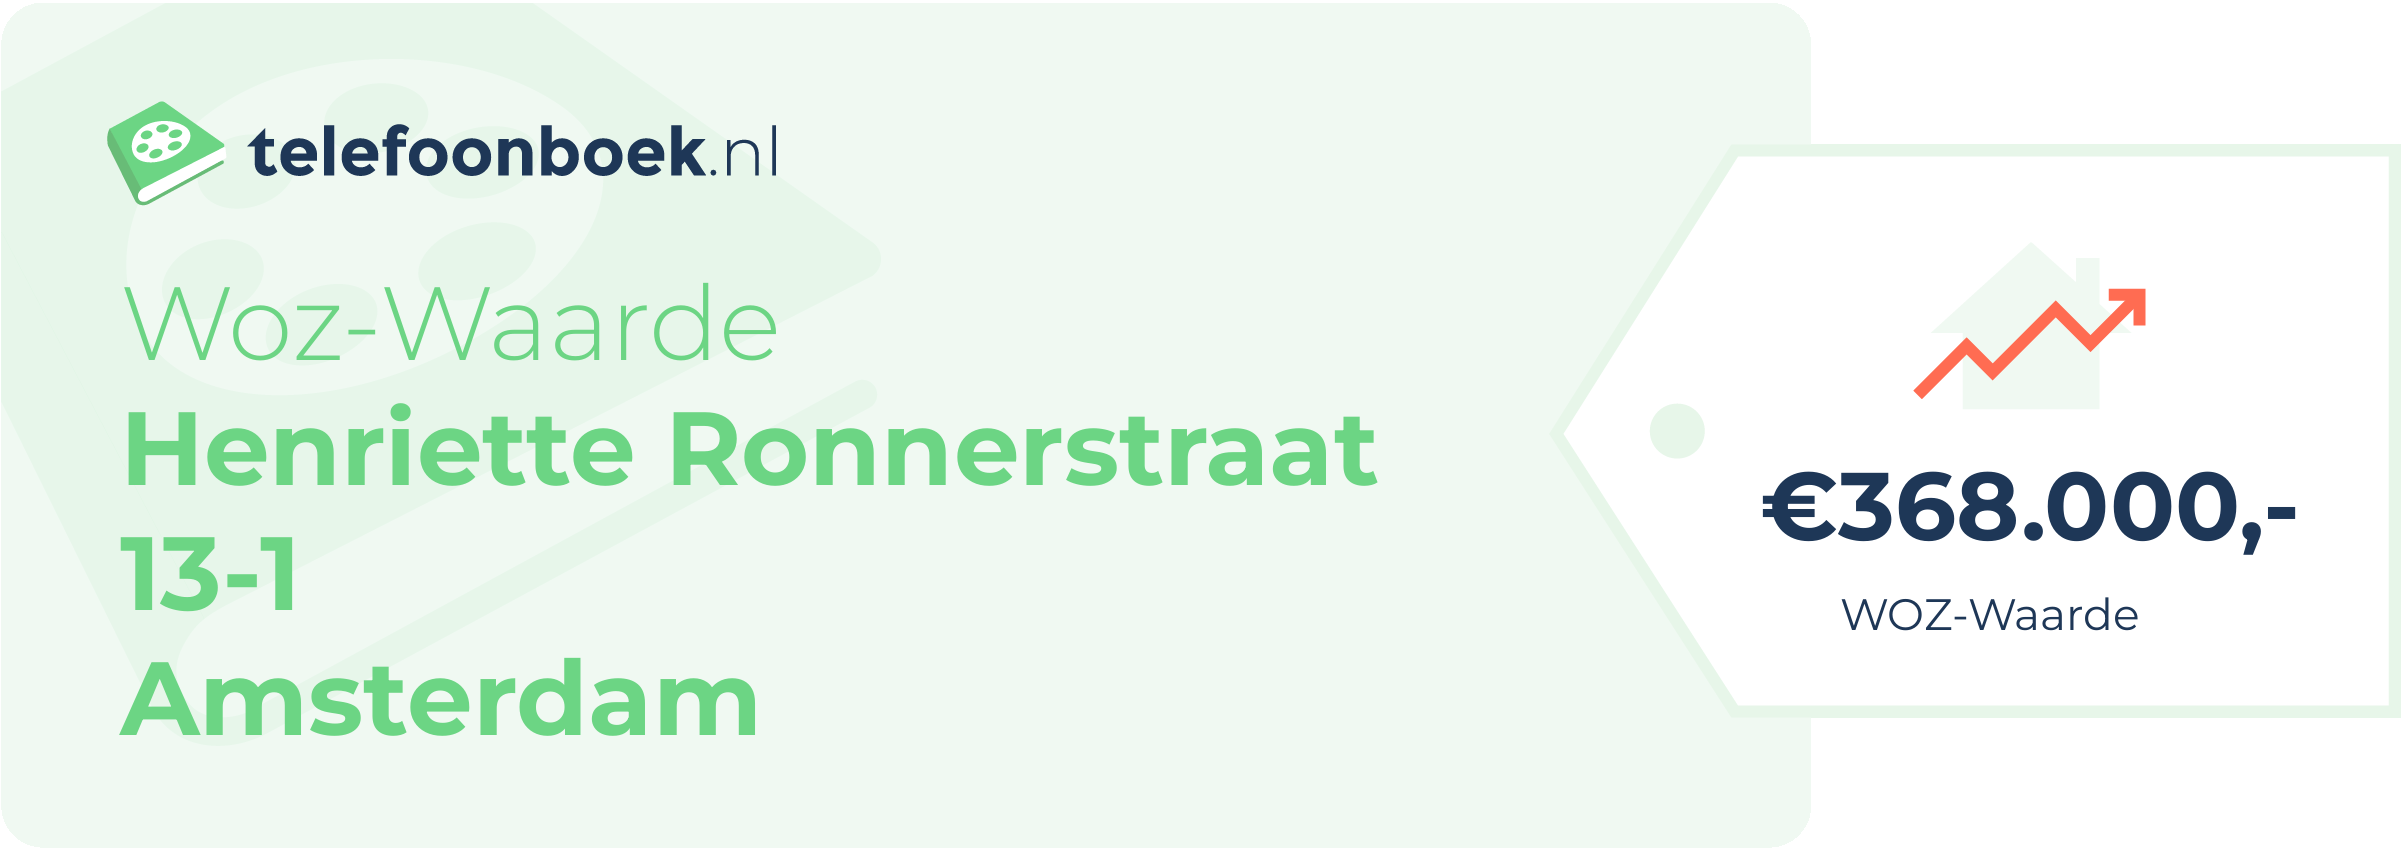 WOZ-waarde Henriette Ronnerstraat 13-1 Amsterdam